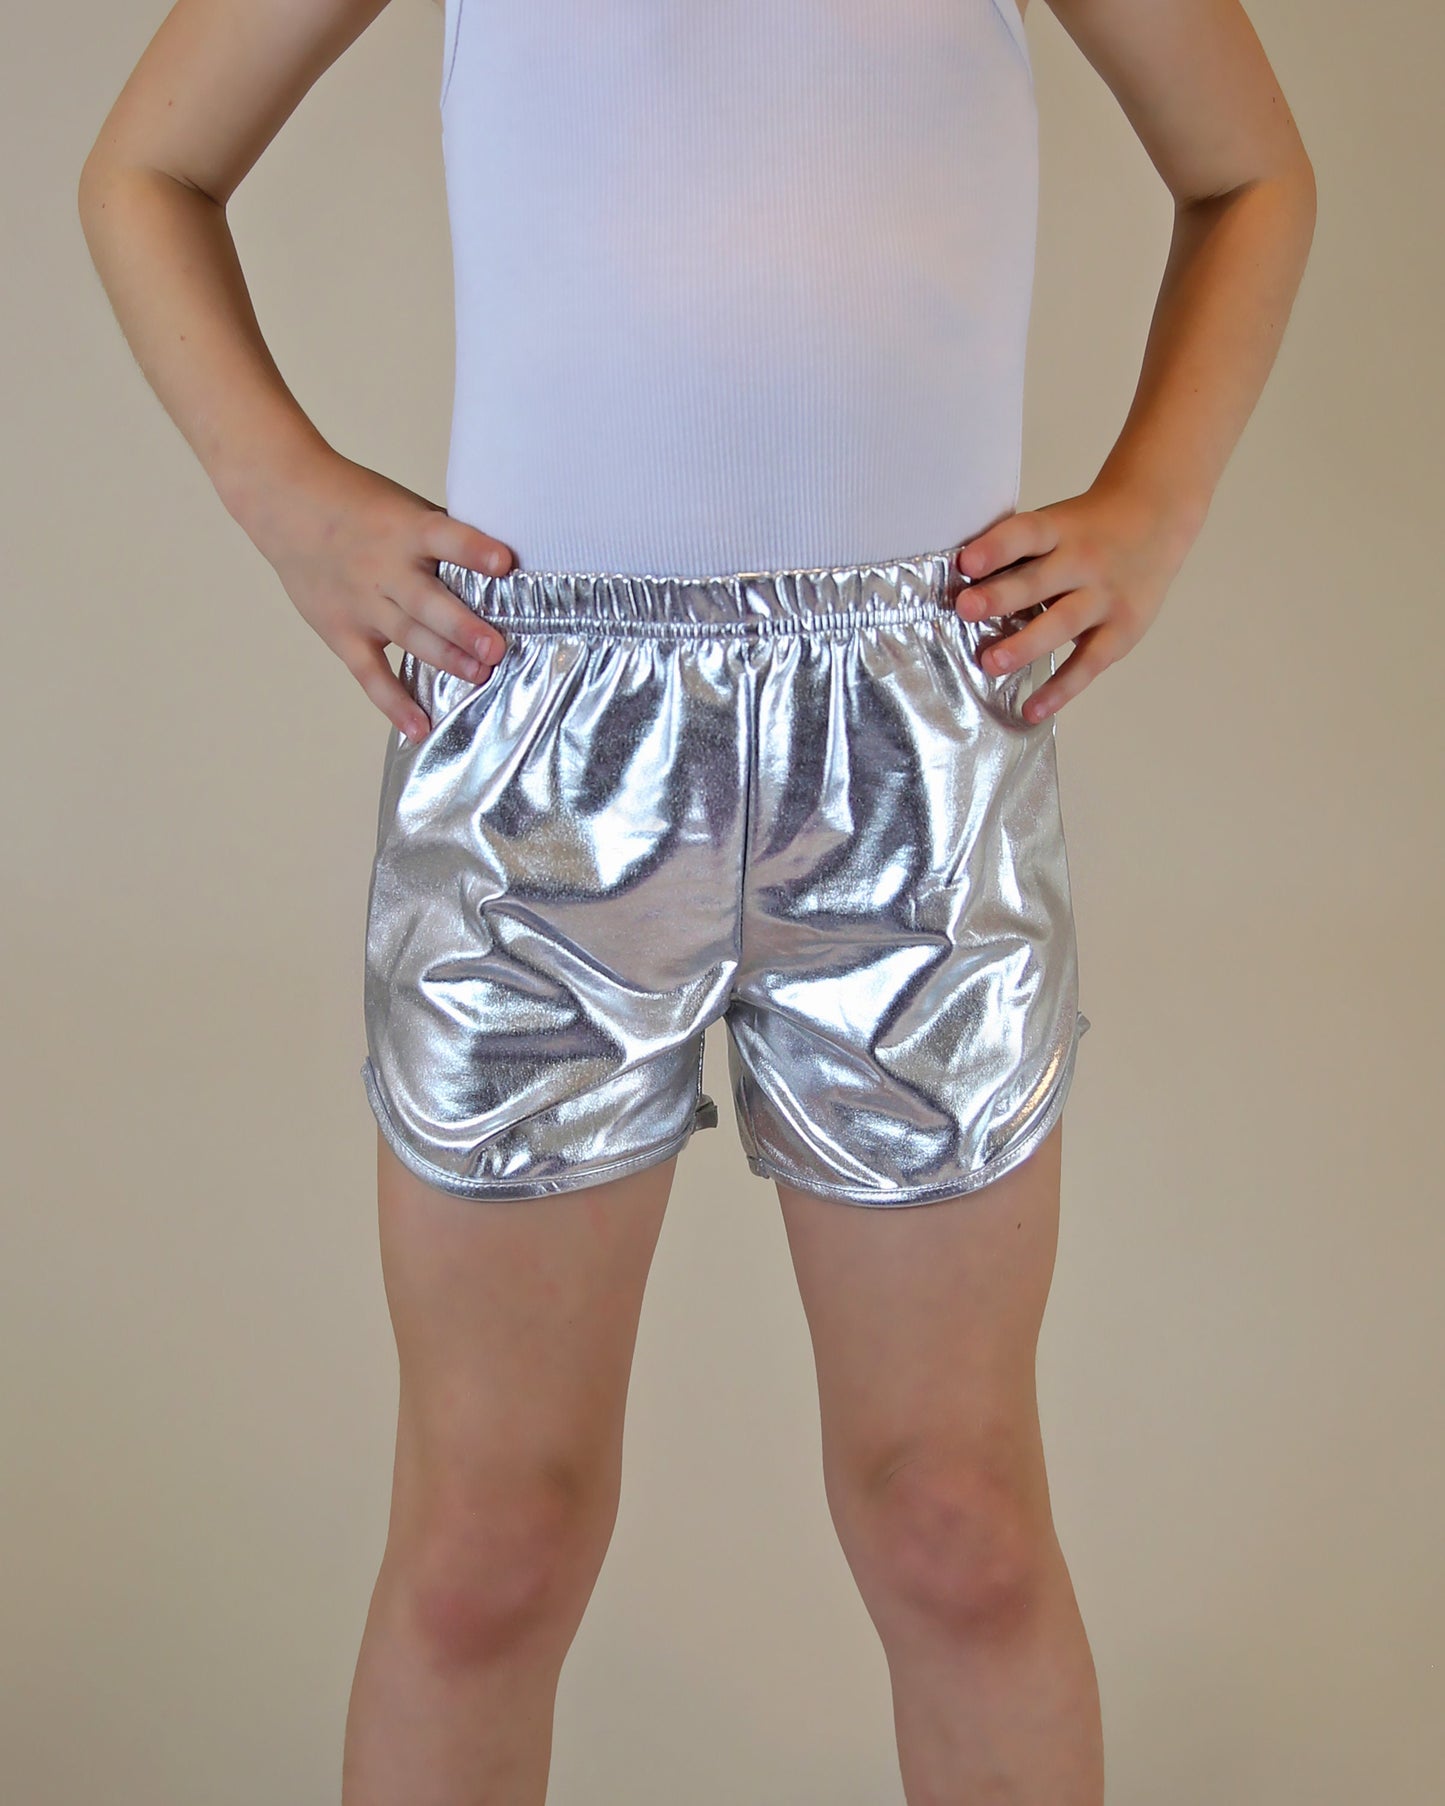 Metallic shorts in Silver